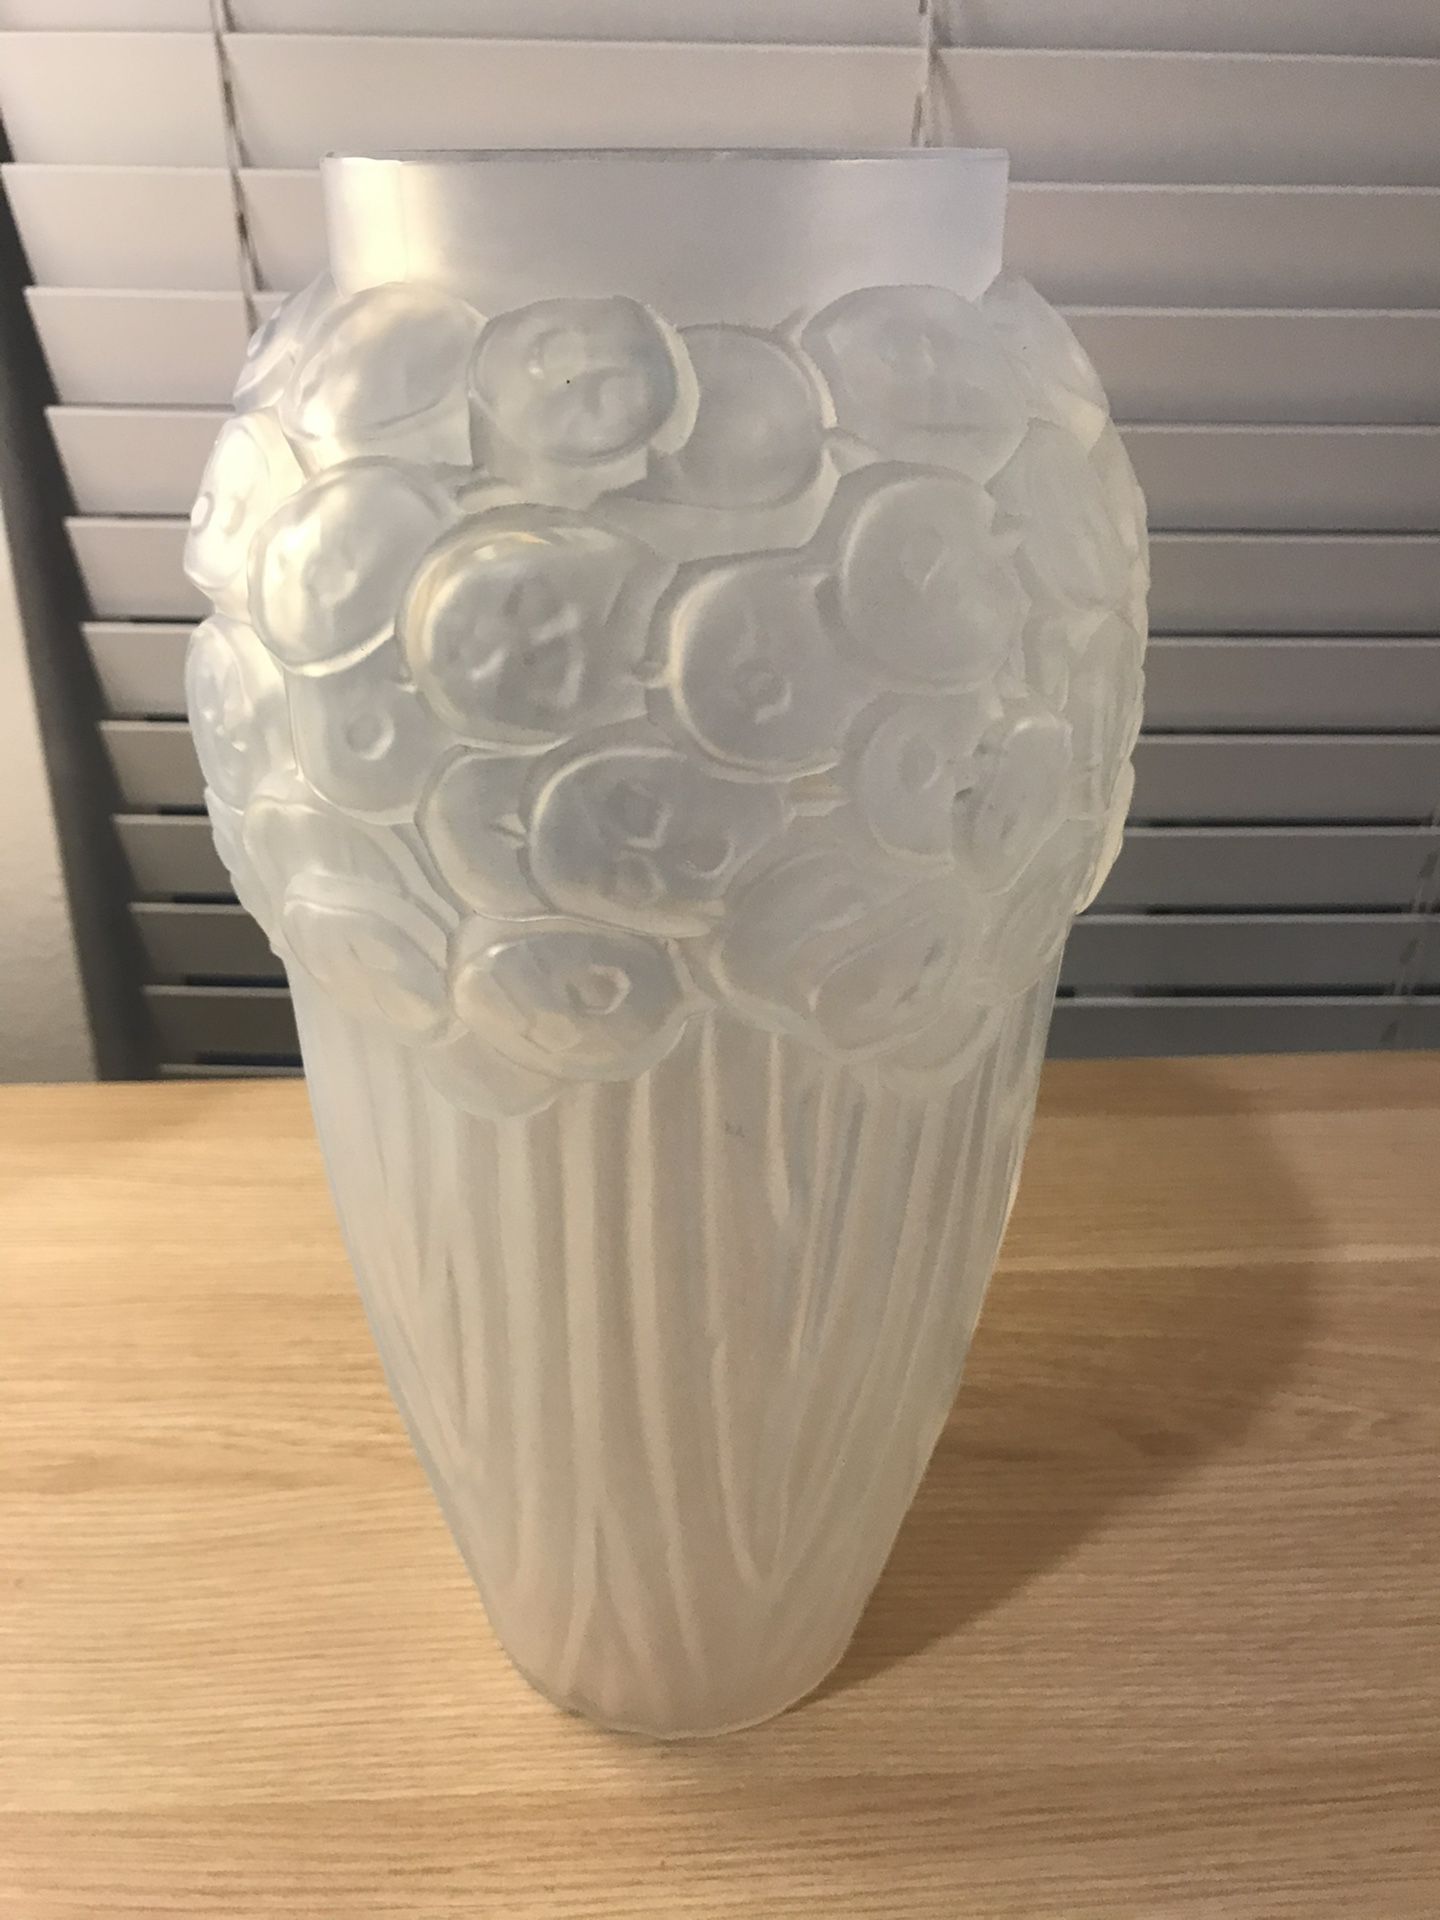 Large Original Etling France Art Deco Glass Vase Opalescent Antique Centerpiece For Sale In